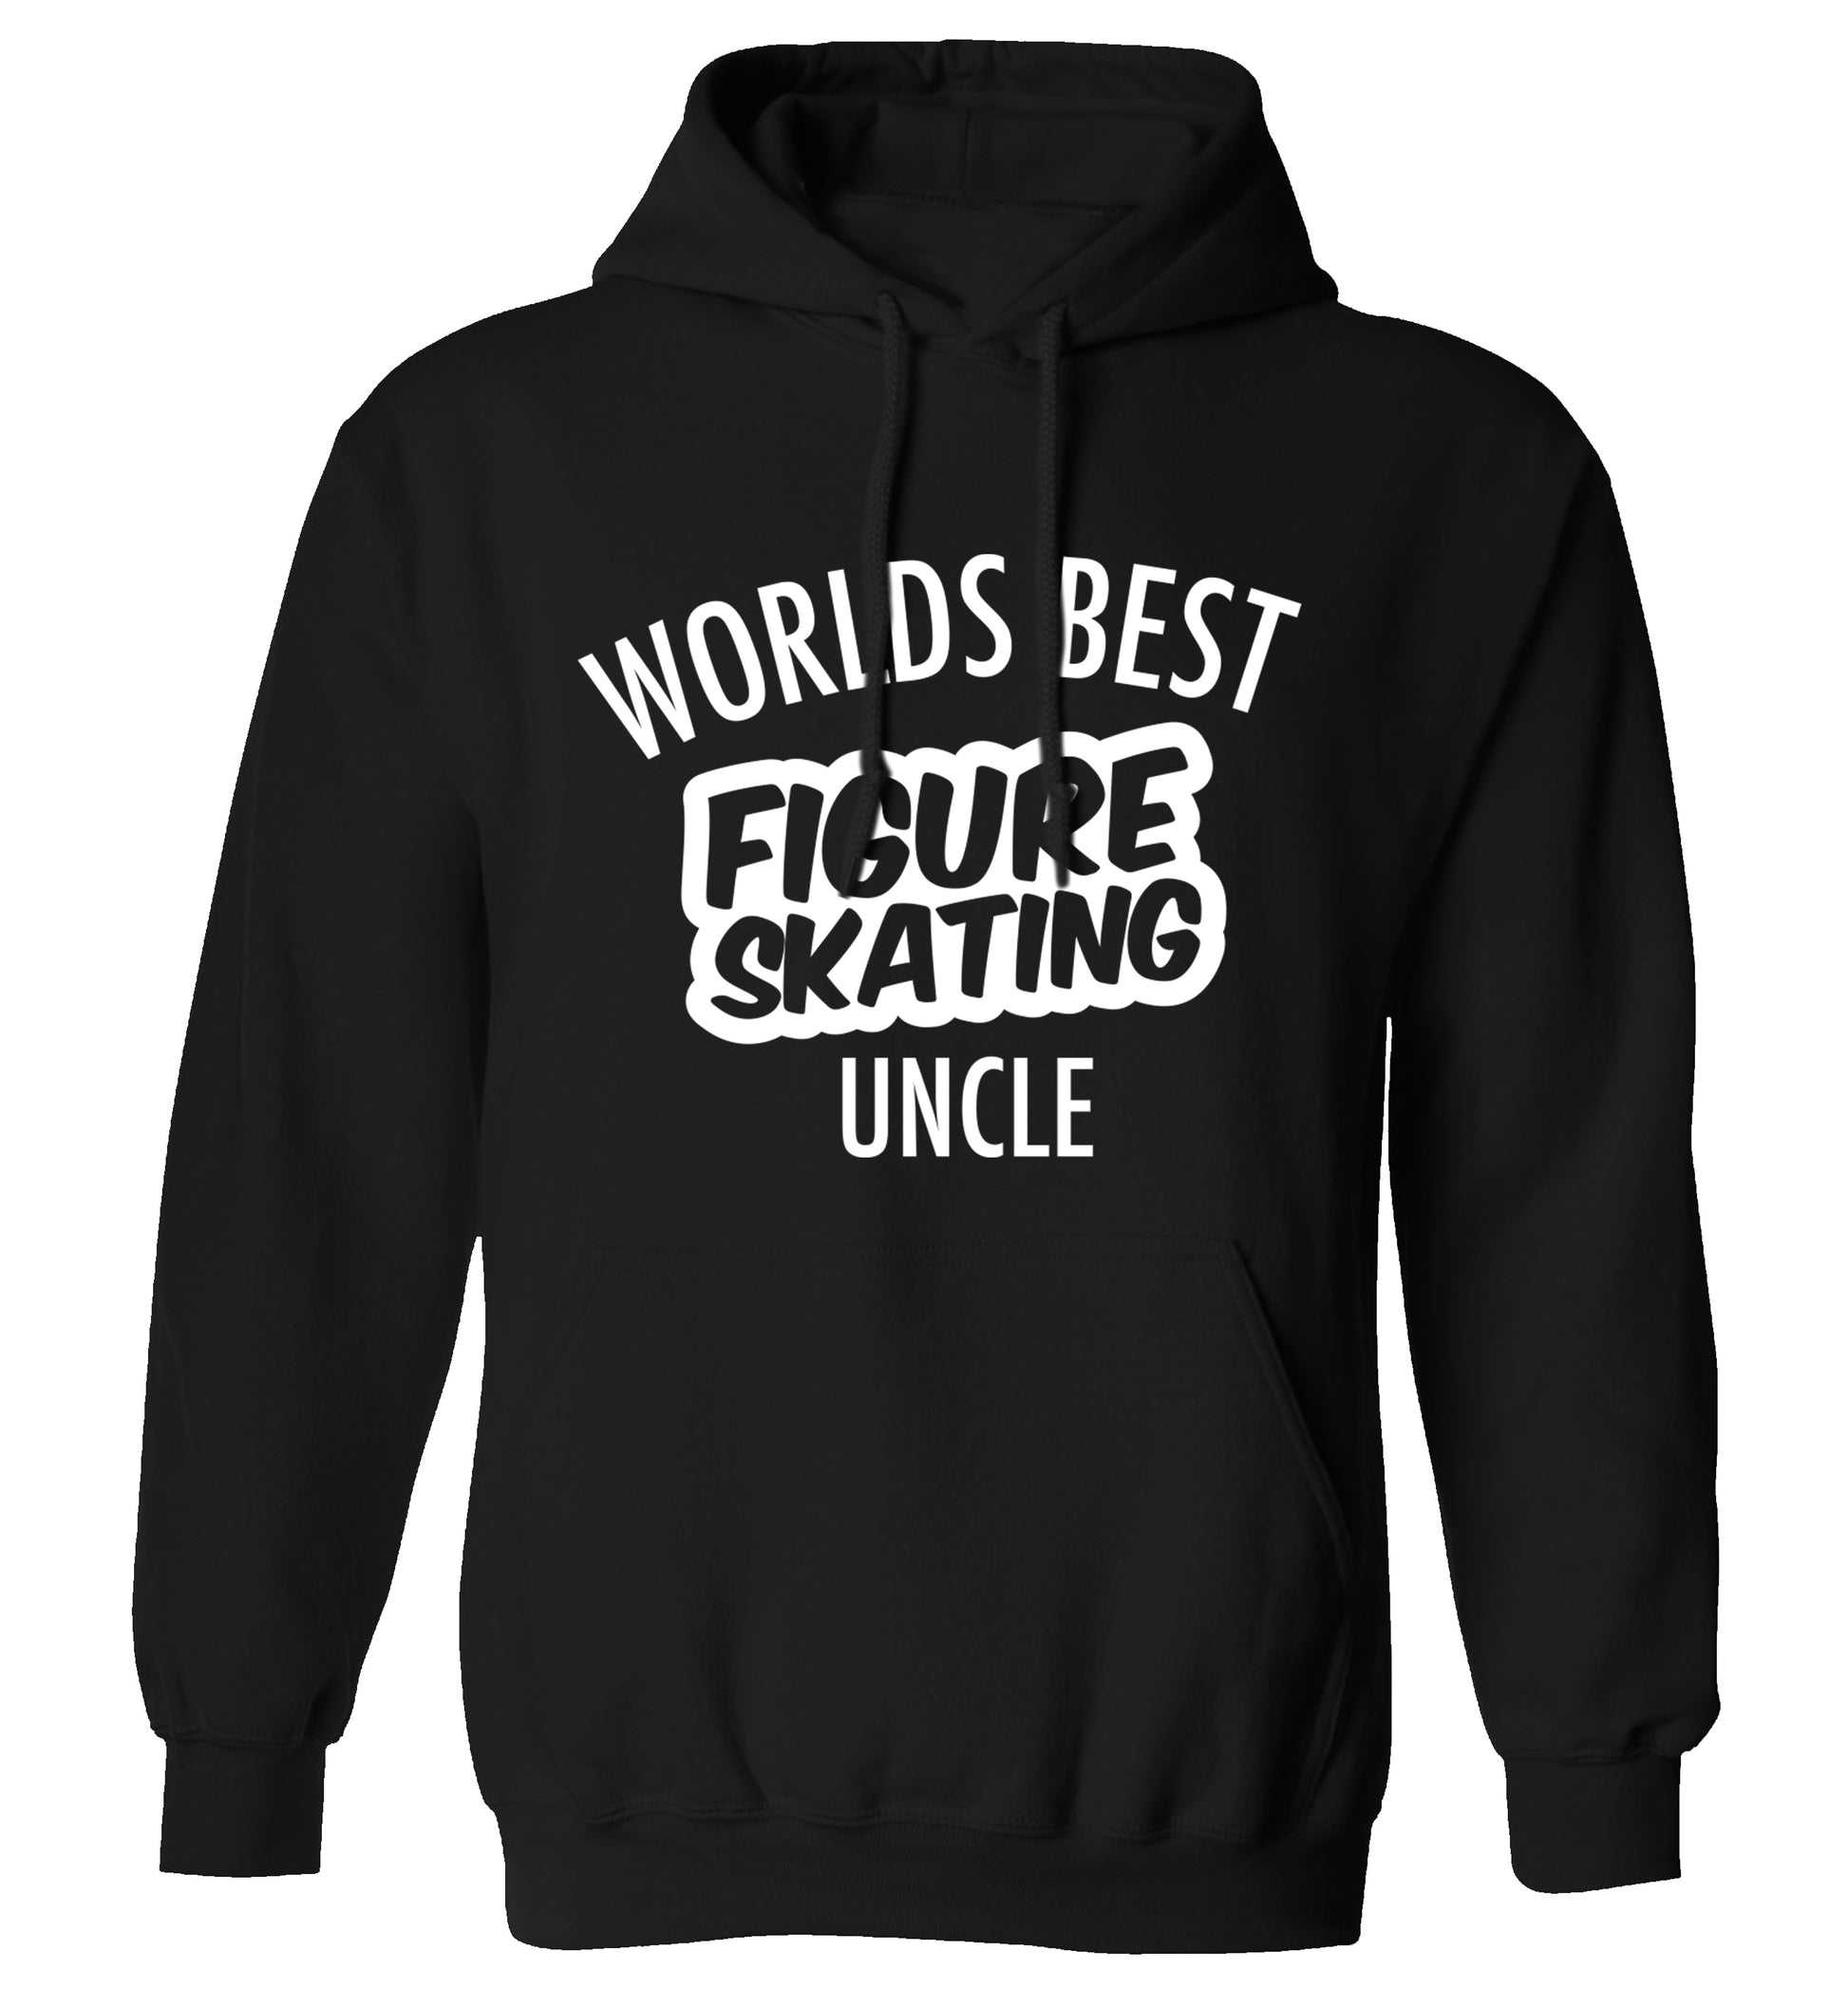 Worlds best figure skating uncle adults unisexblack hoodie 2XL